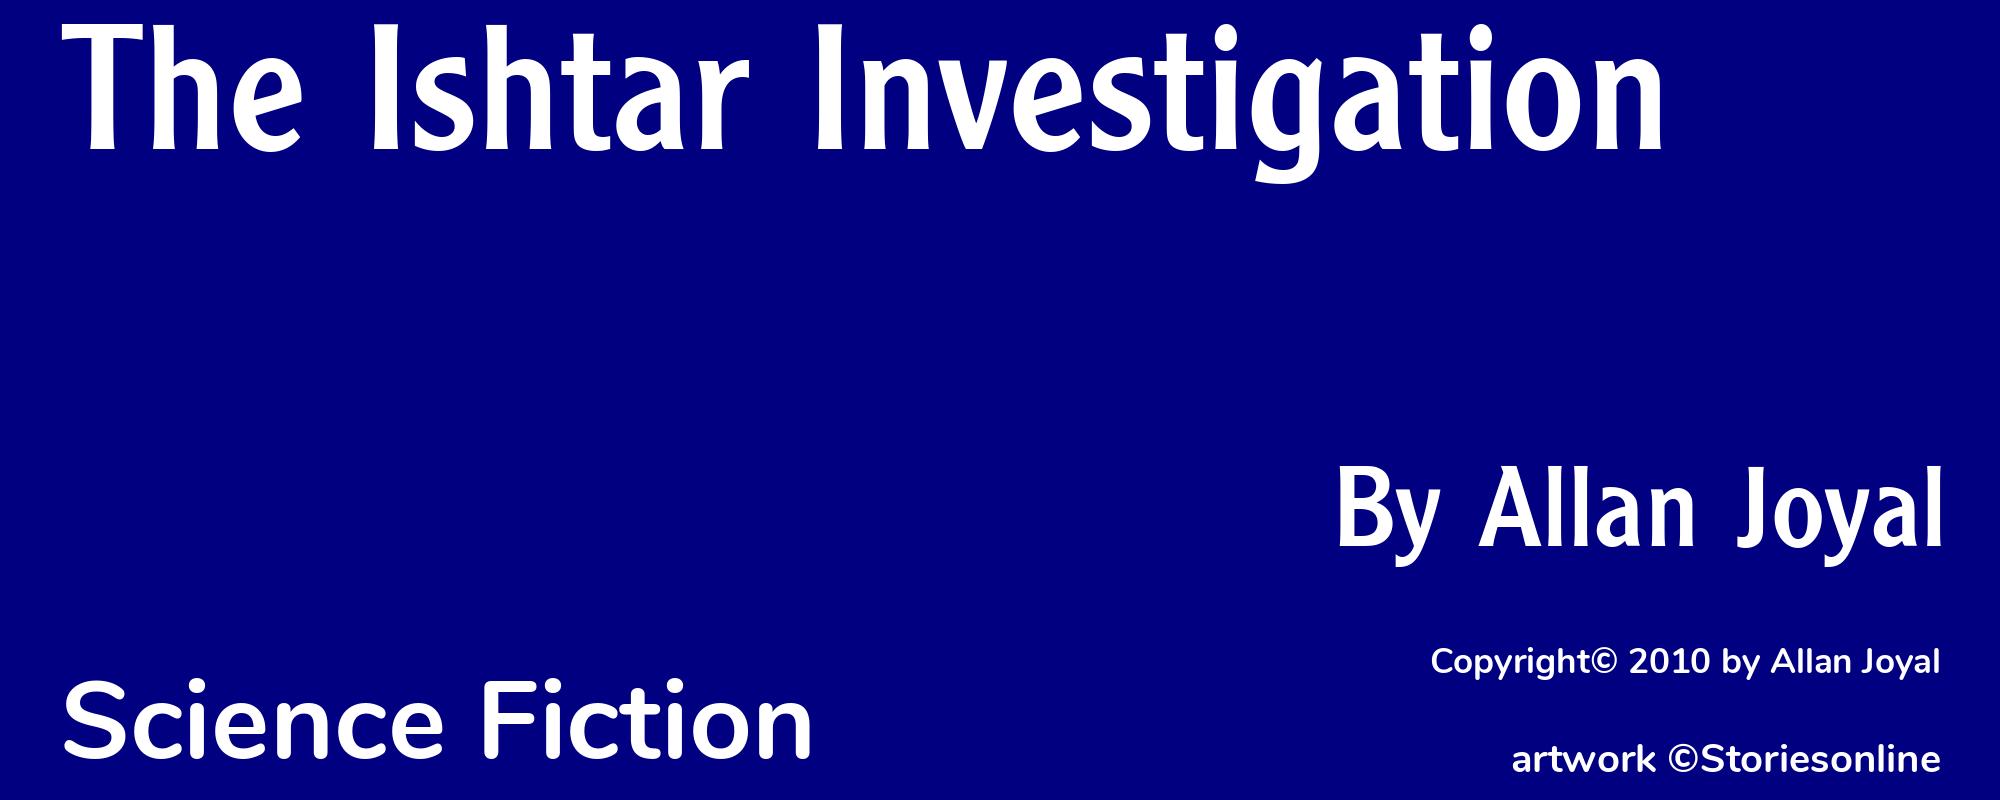 The Ishtar Investigation - Cover